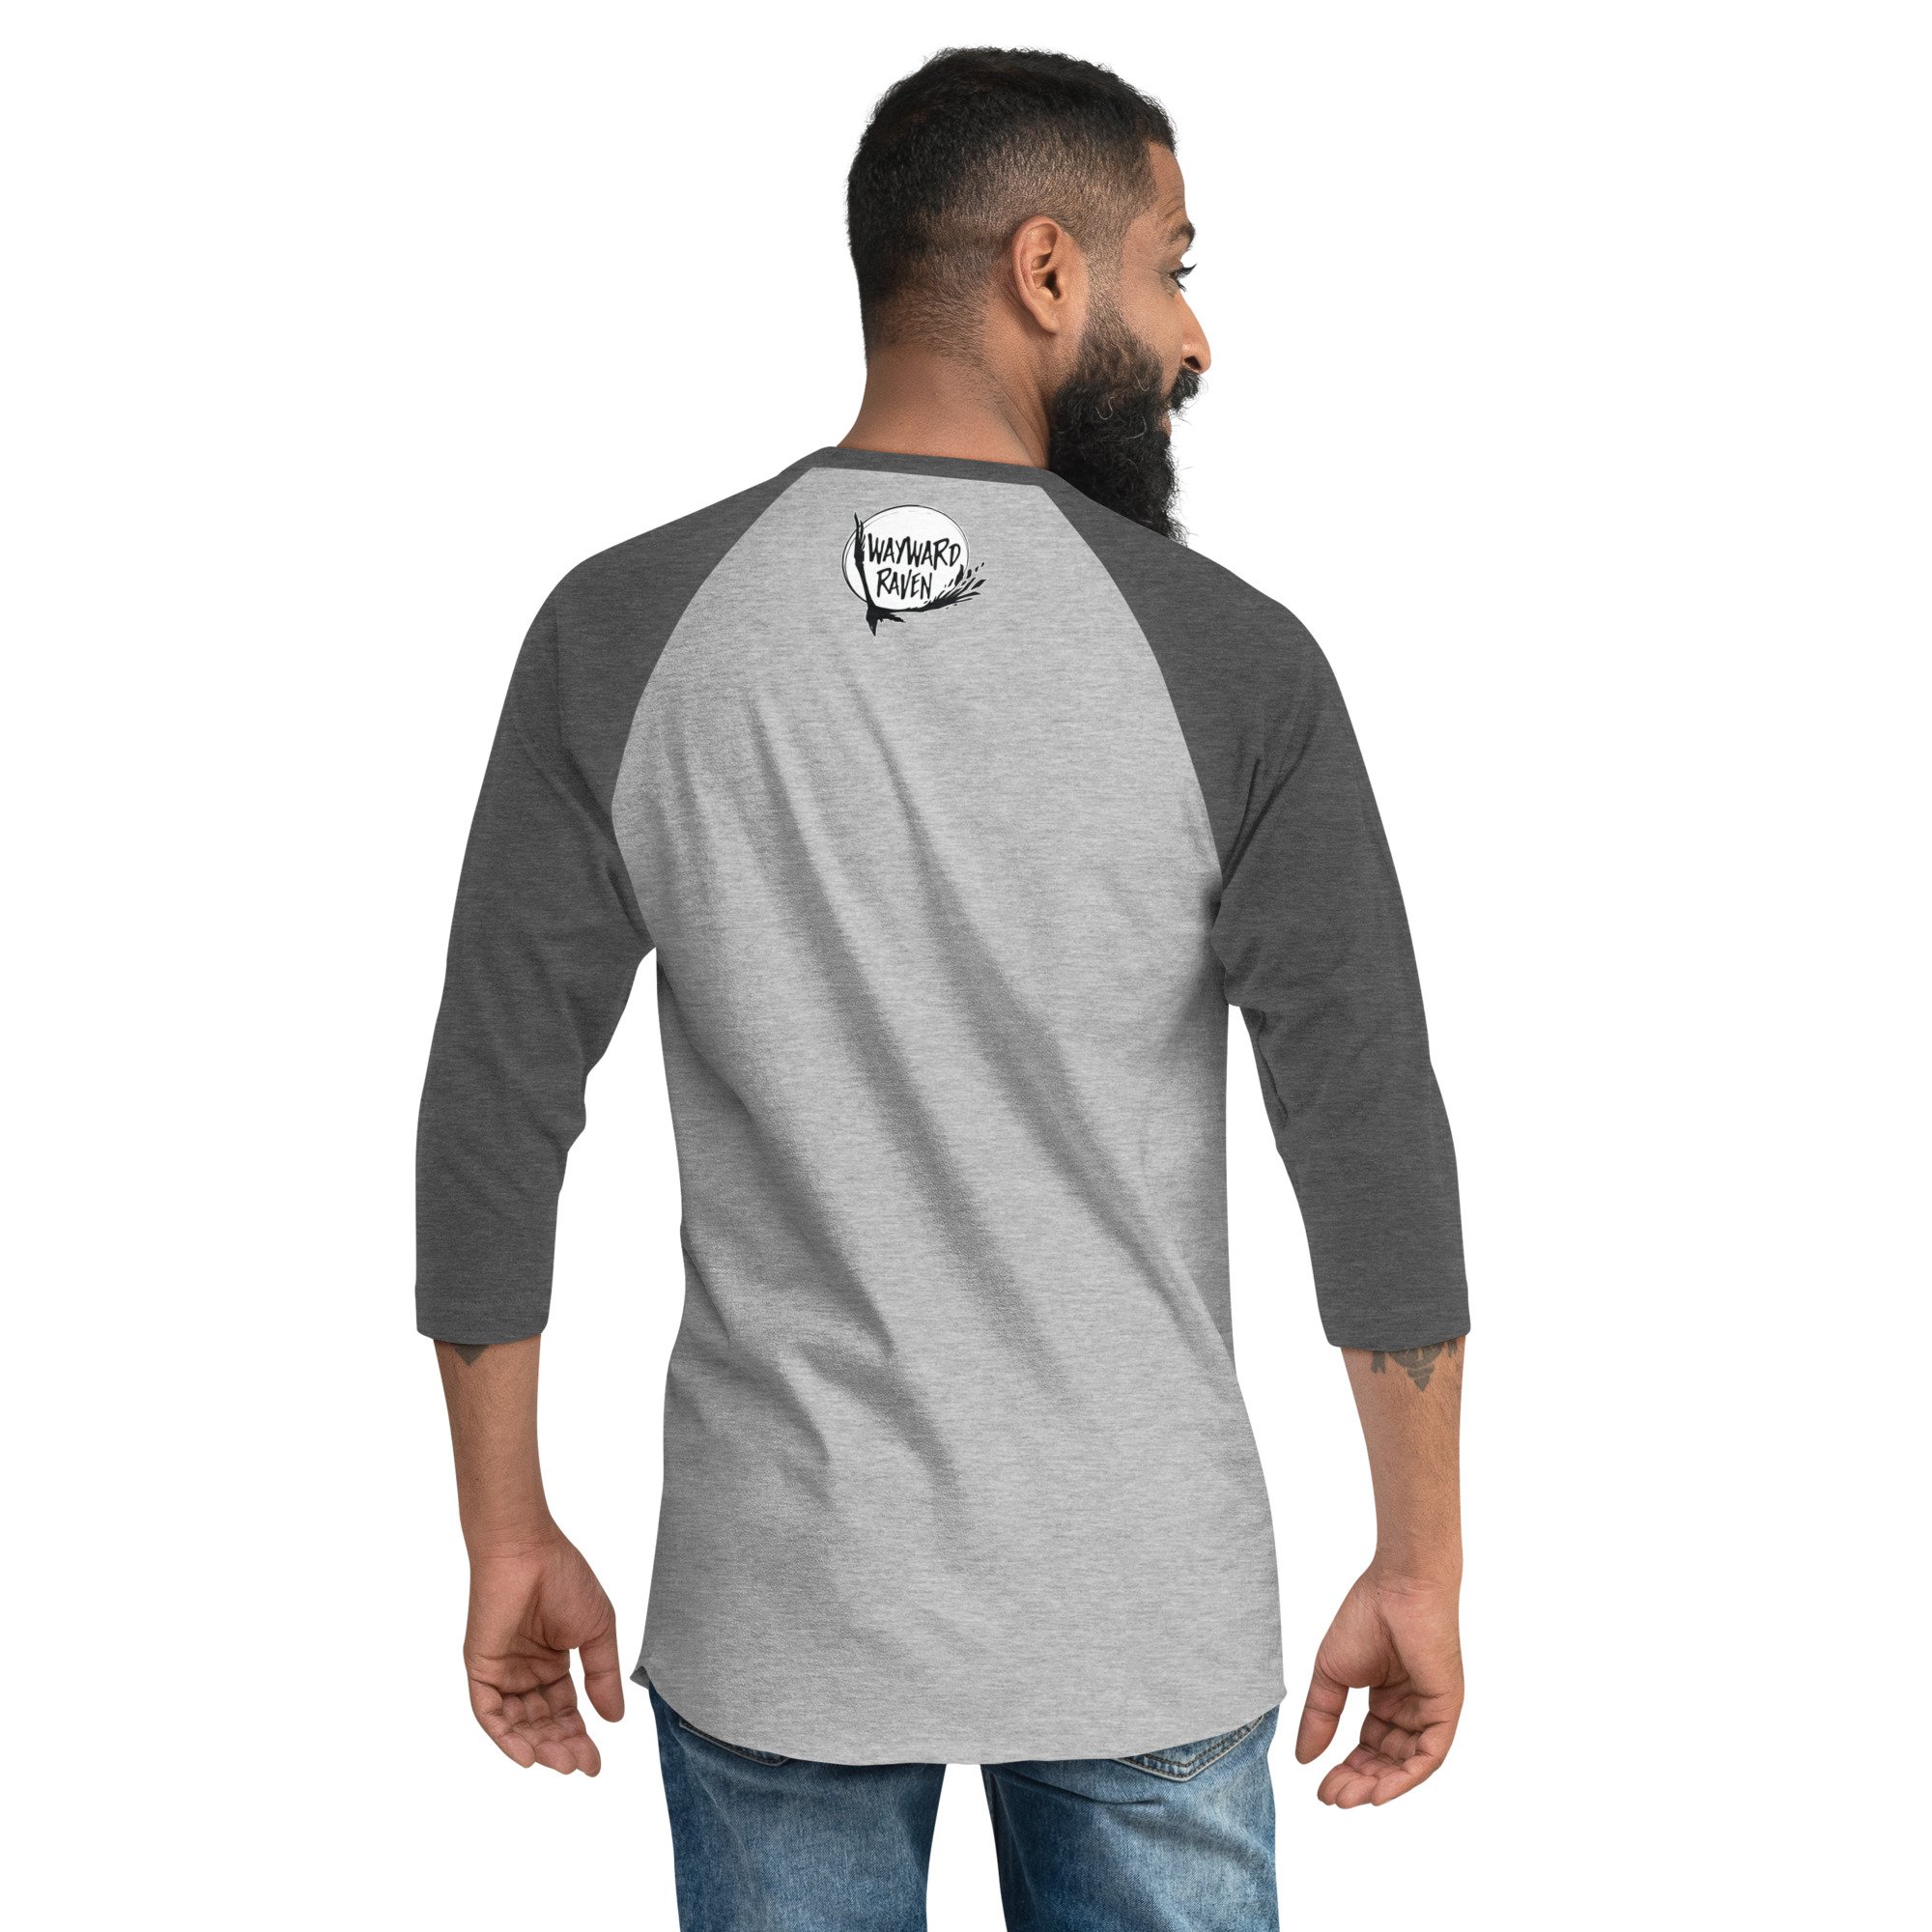 unisex-34-sleeve-raglan-shirt-heather-grey-heather-charcoal-back-65fdcb001bda0.jpg